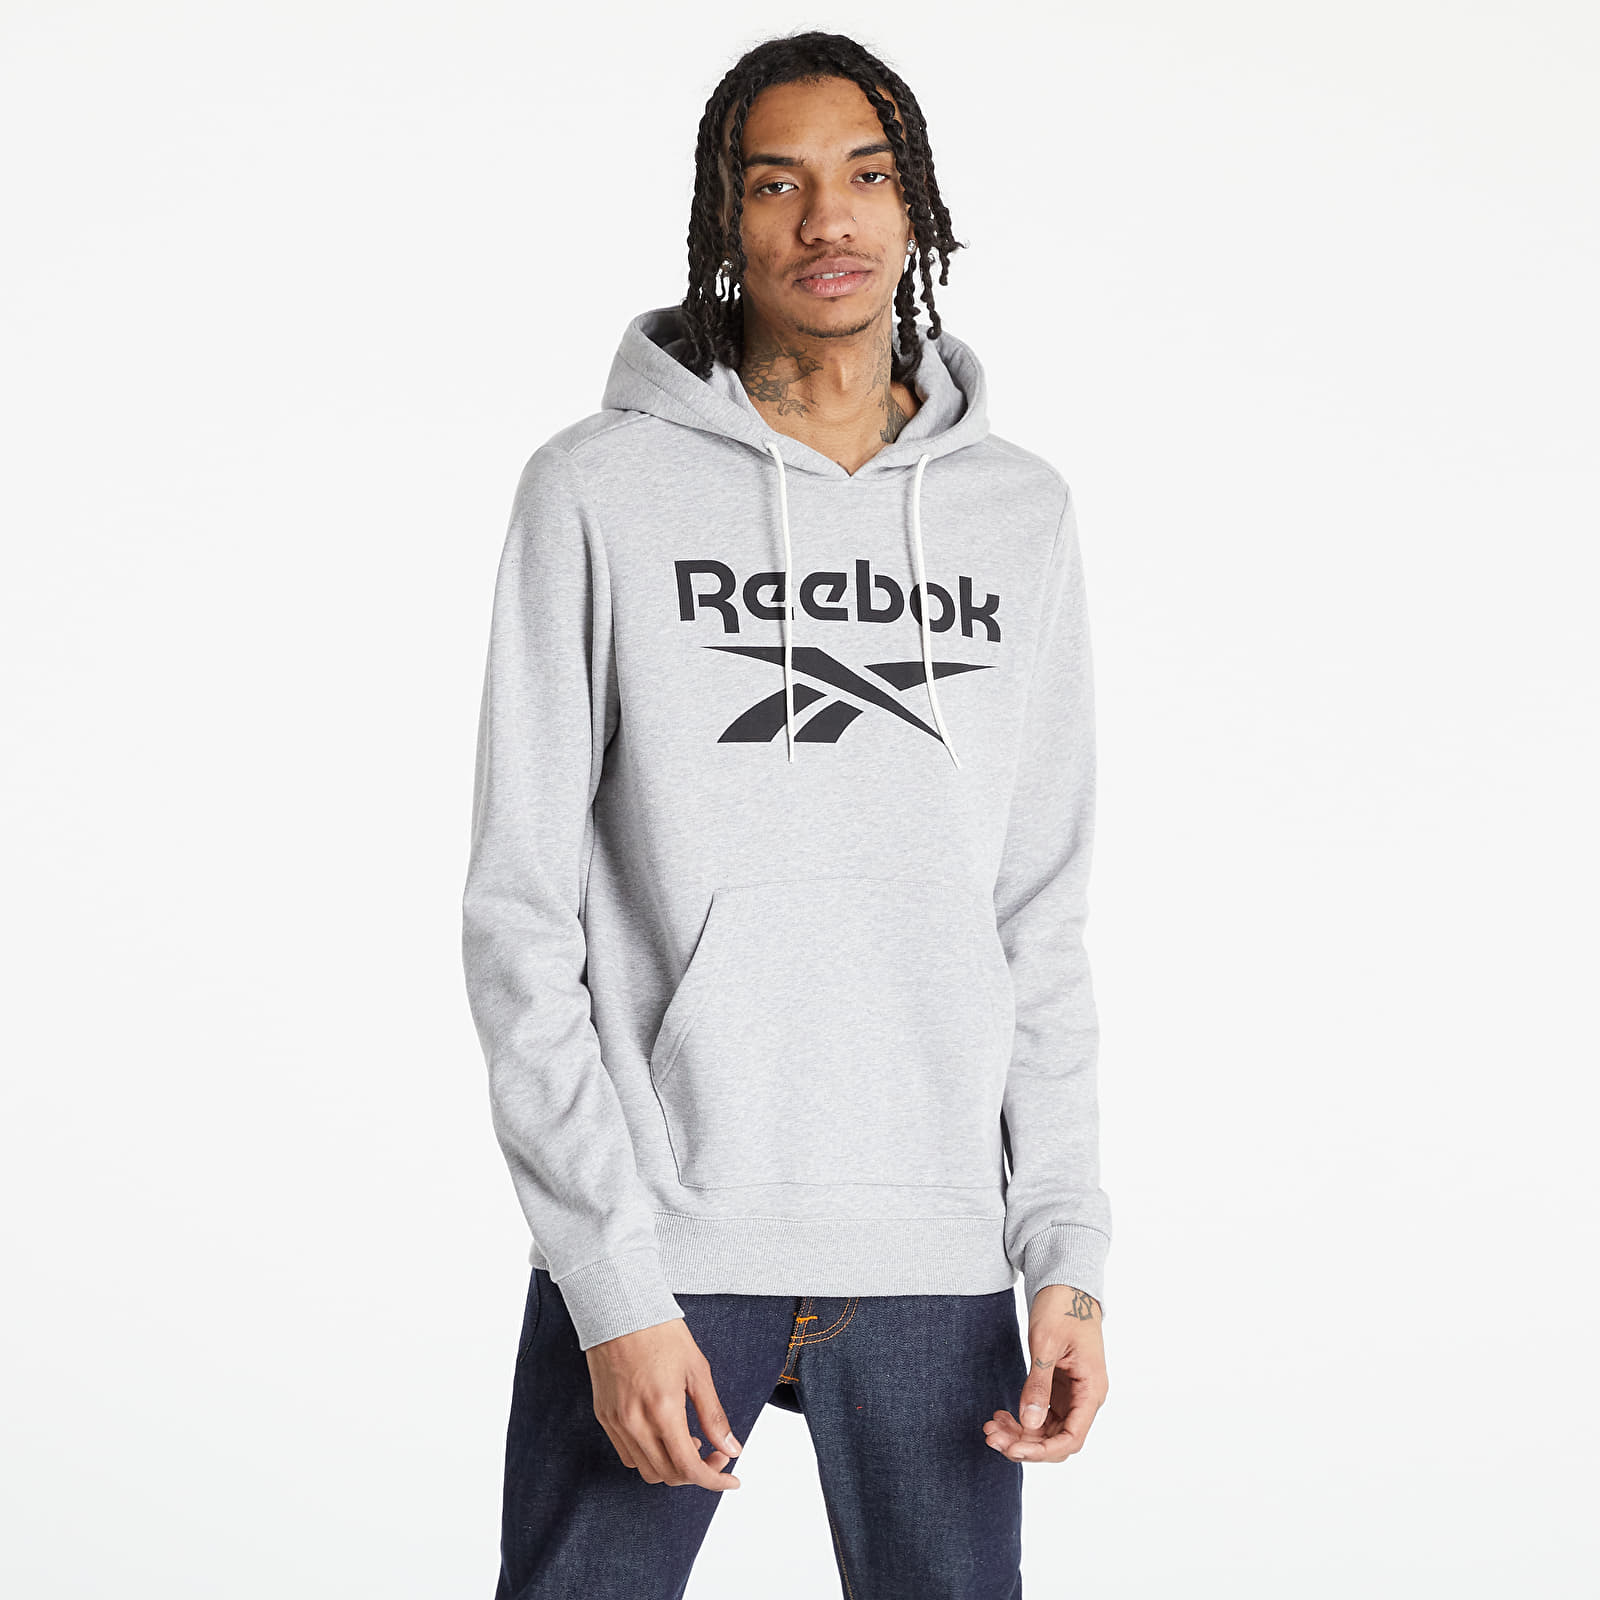 Reebok - ri ft oth bl hoodie gray